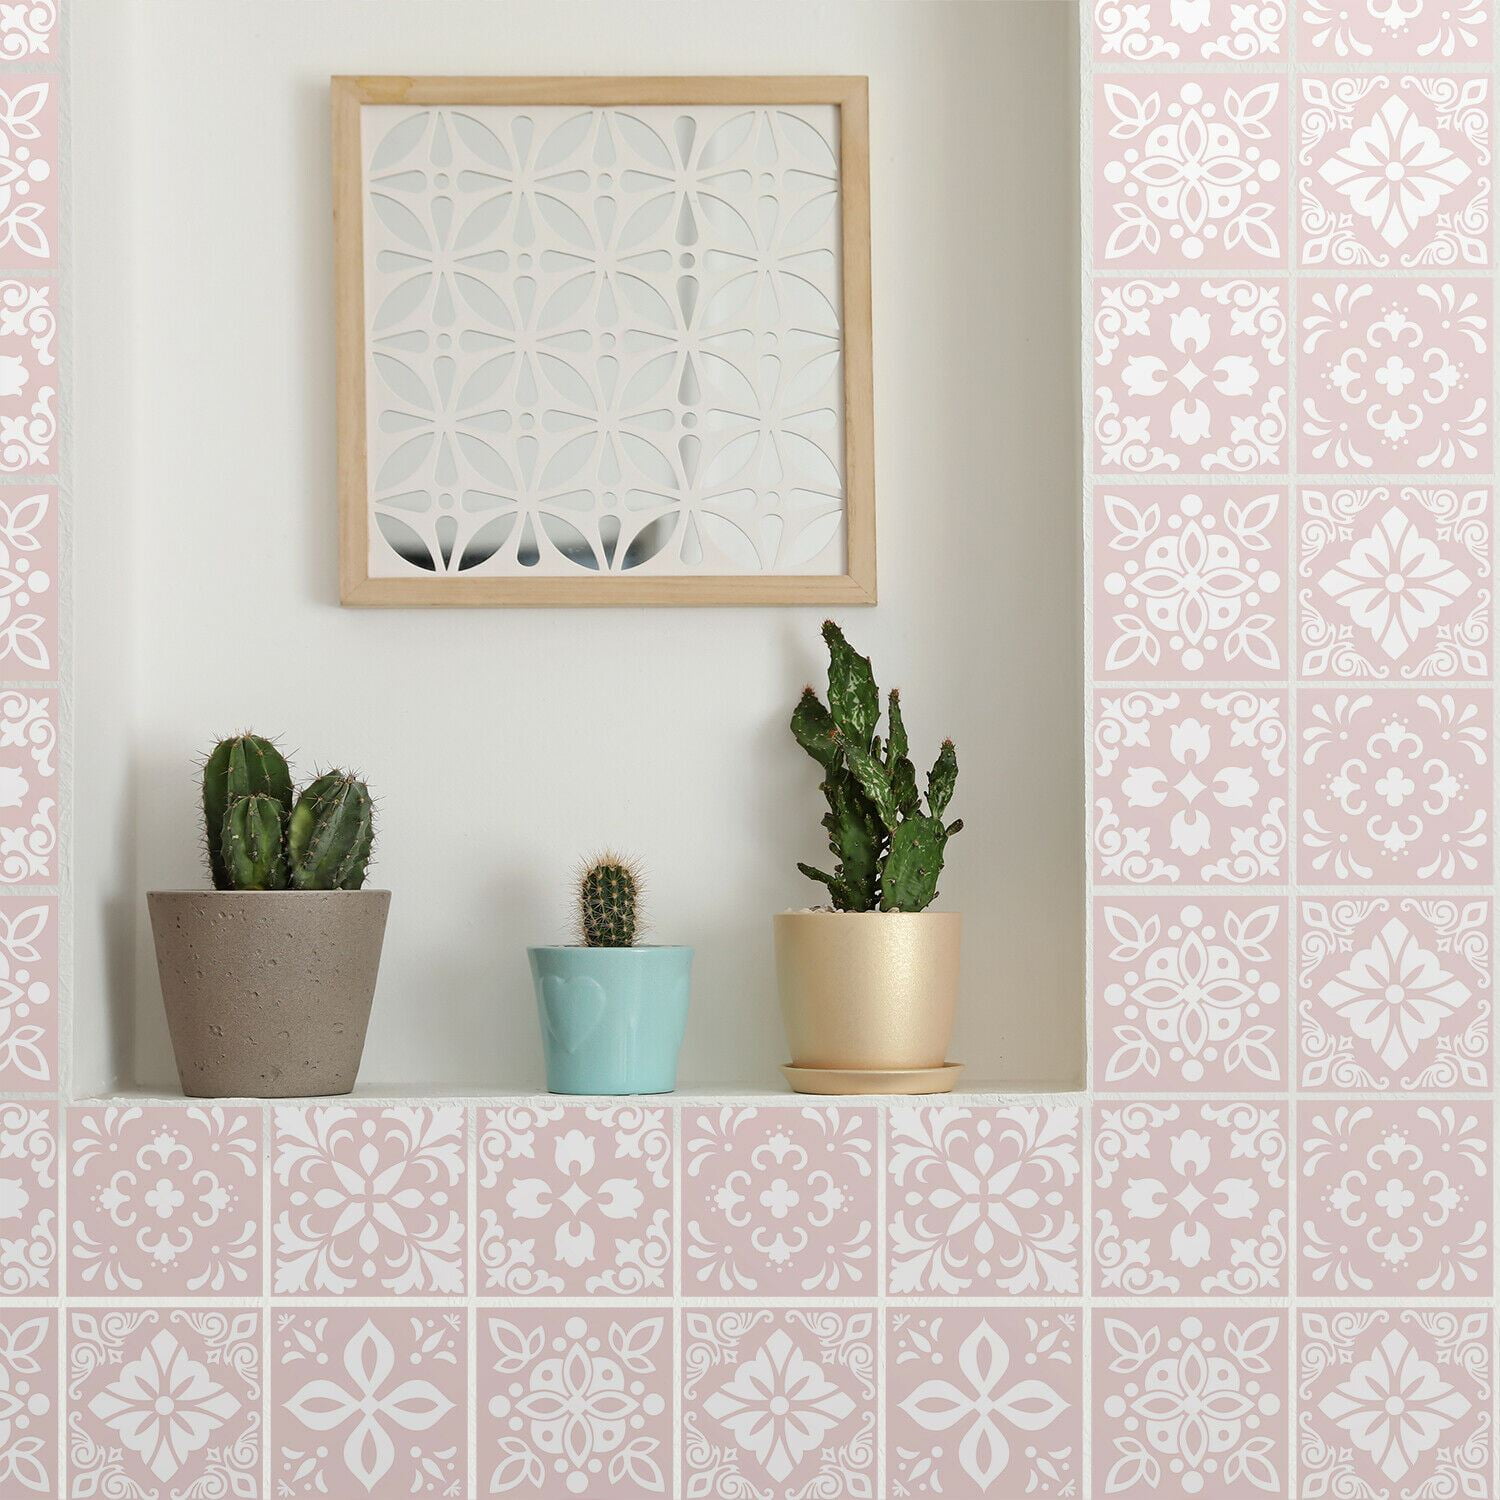 6"' @ 48pcs Walplus Spanish Limestone  Mosaic Tile Wall Sticker Decals Size